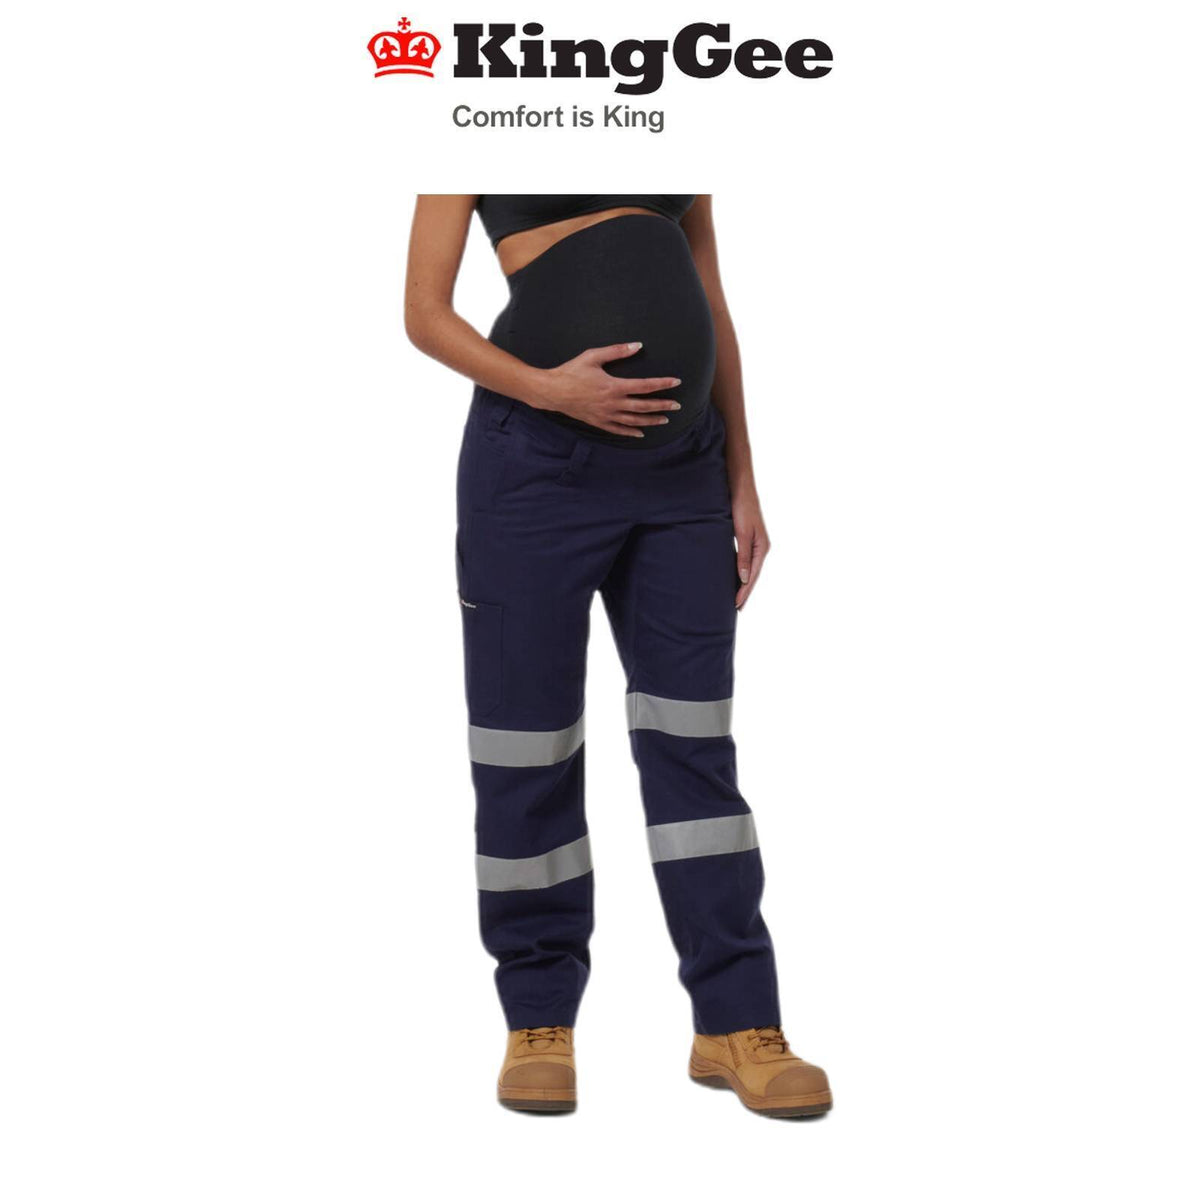 KingGee Womens Safety WorkCool Maternity Reflective Bio Motion Pant K43007